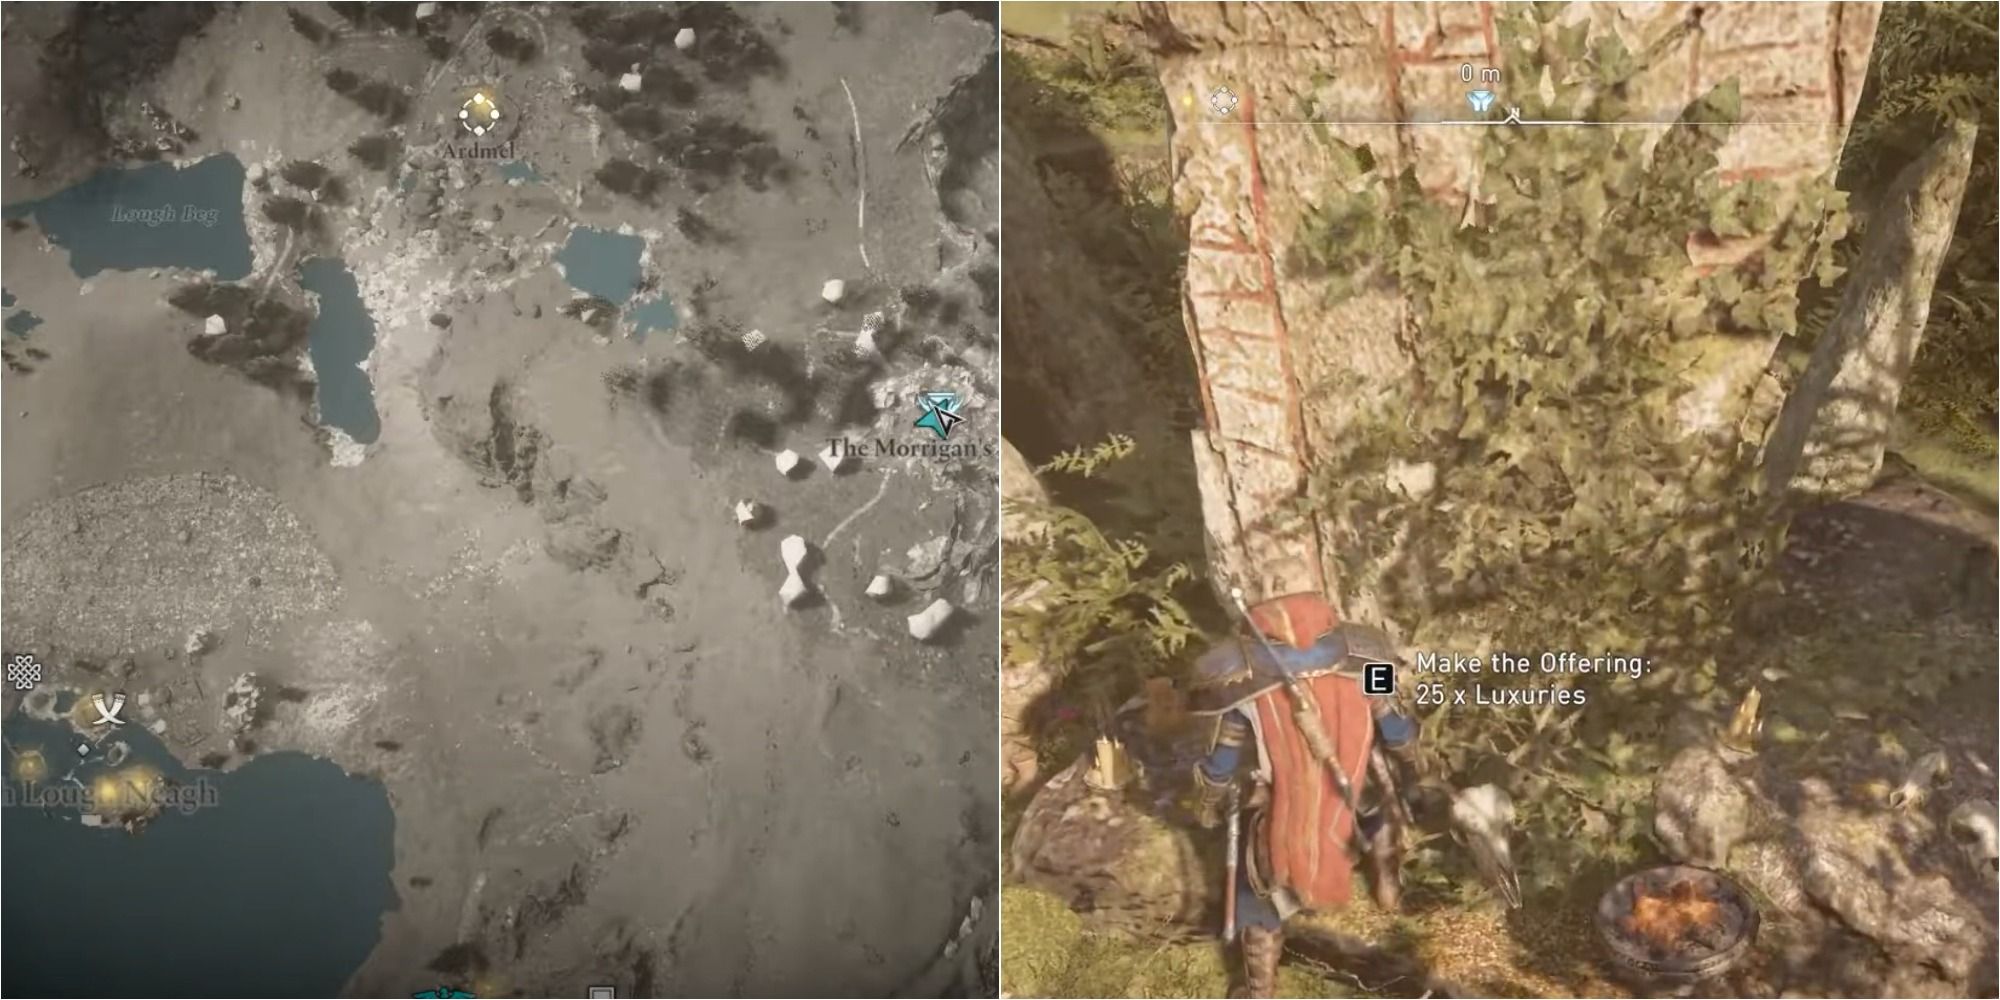 Assassin's Creed Valhalla Split Image Showing Morrigan's Altar Location